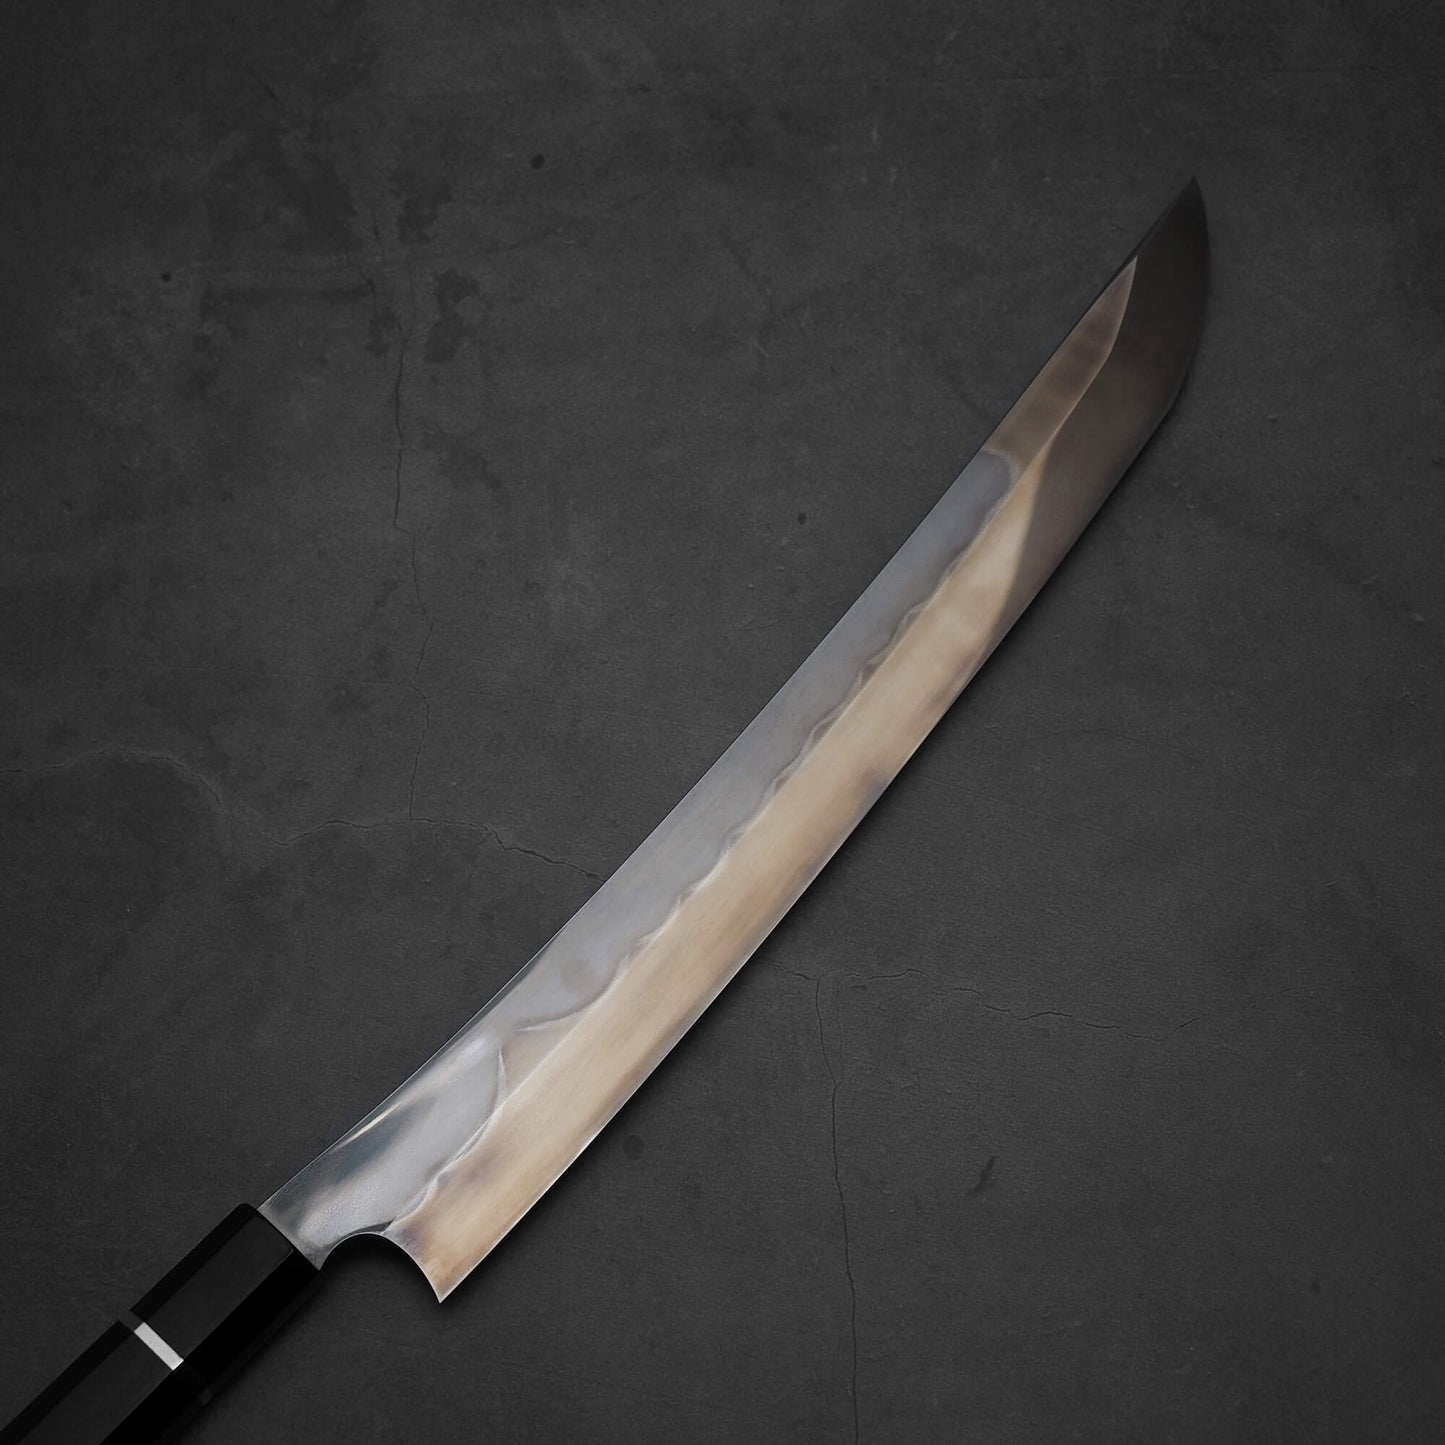 Top view of Nigara shirogami#1 mizuhonyaki sakimaru yanagiba. Image shows the right side of the blade